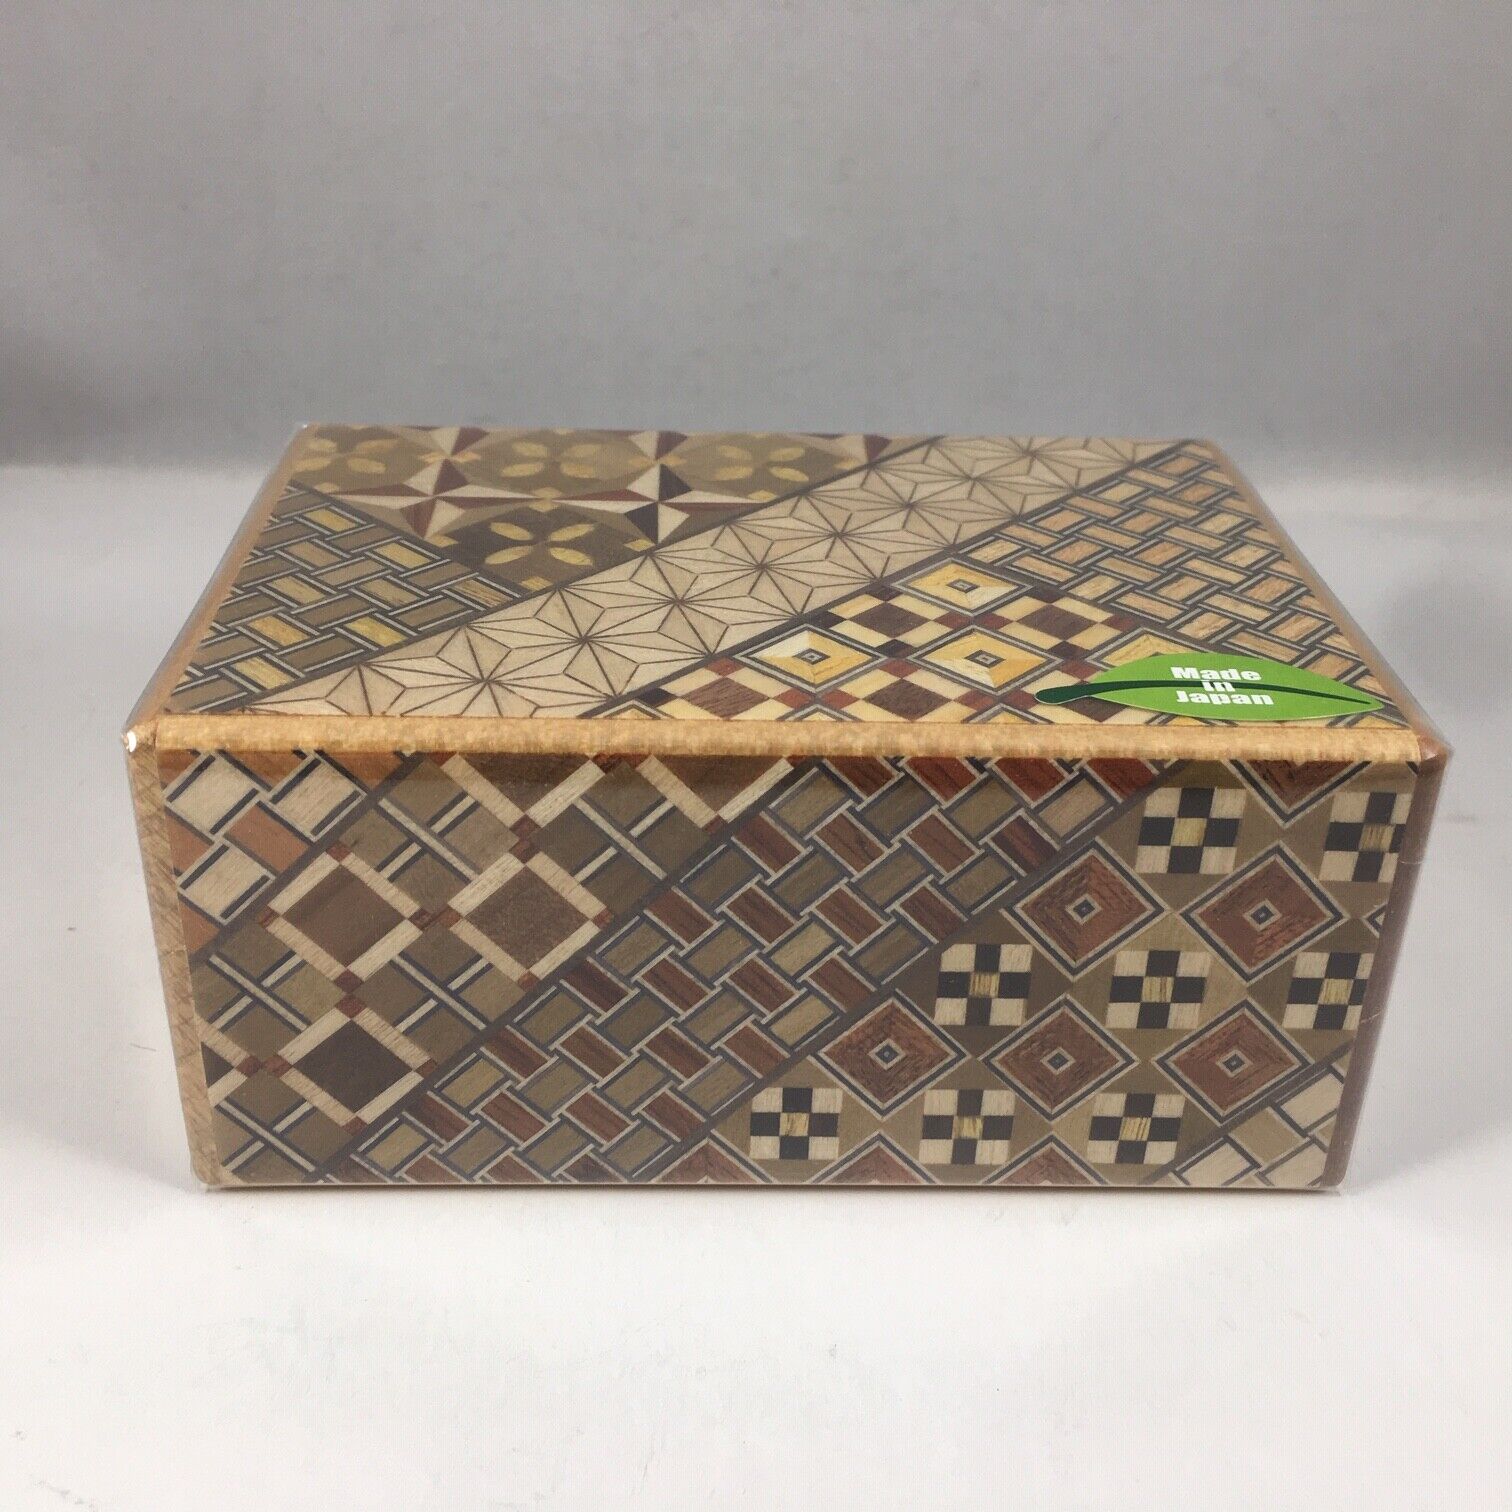 Japanese Yosegi Puzzle Box Wooden Magic Trick Box 21 Steps HK-125 Made in Japan